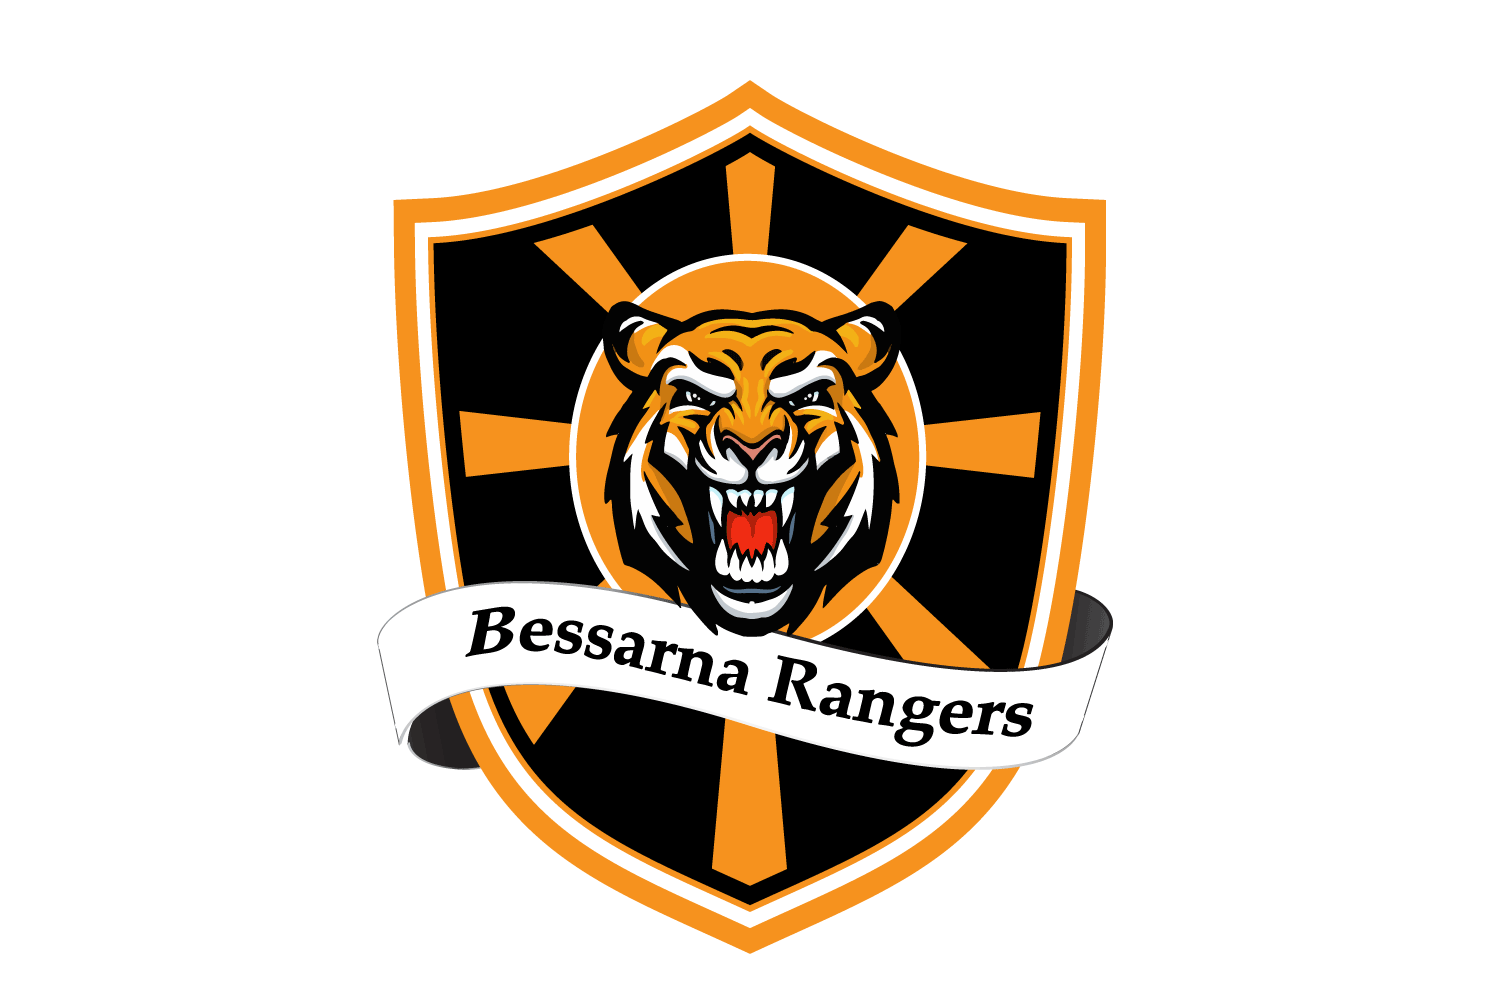 The Bessarna Rangers Club-logo